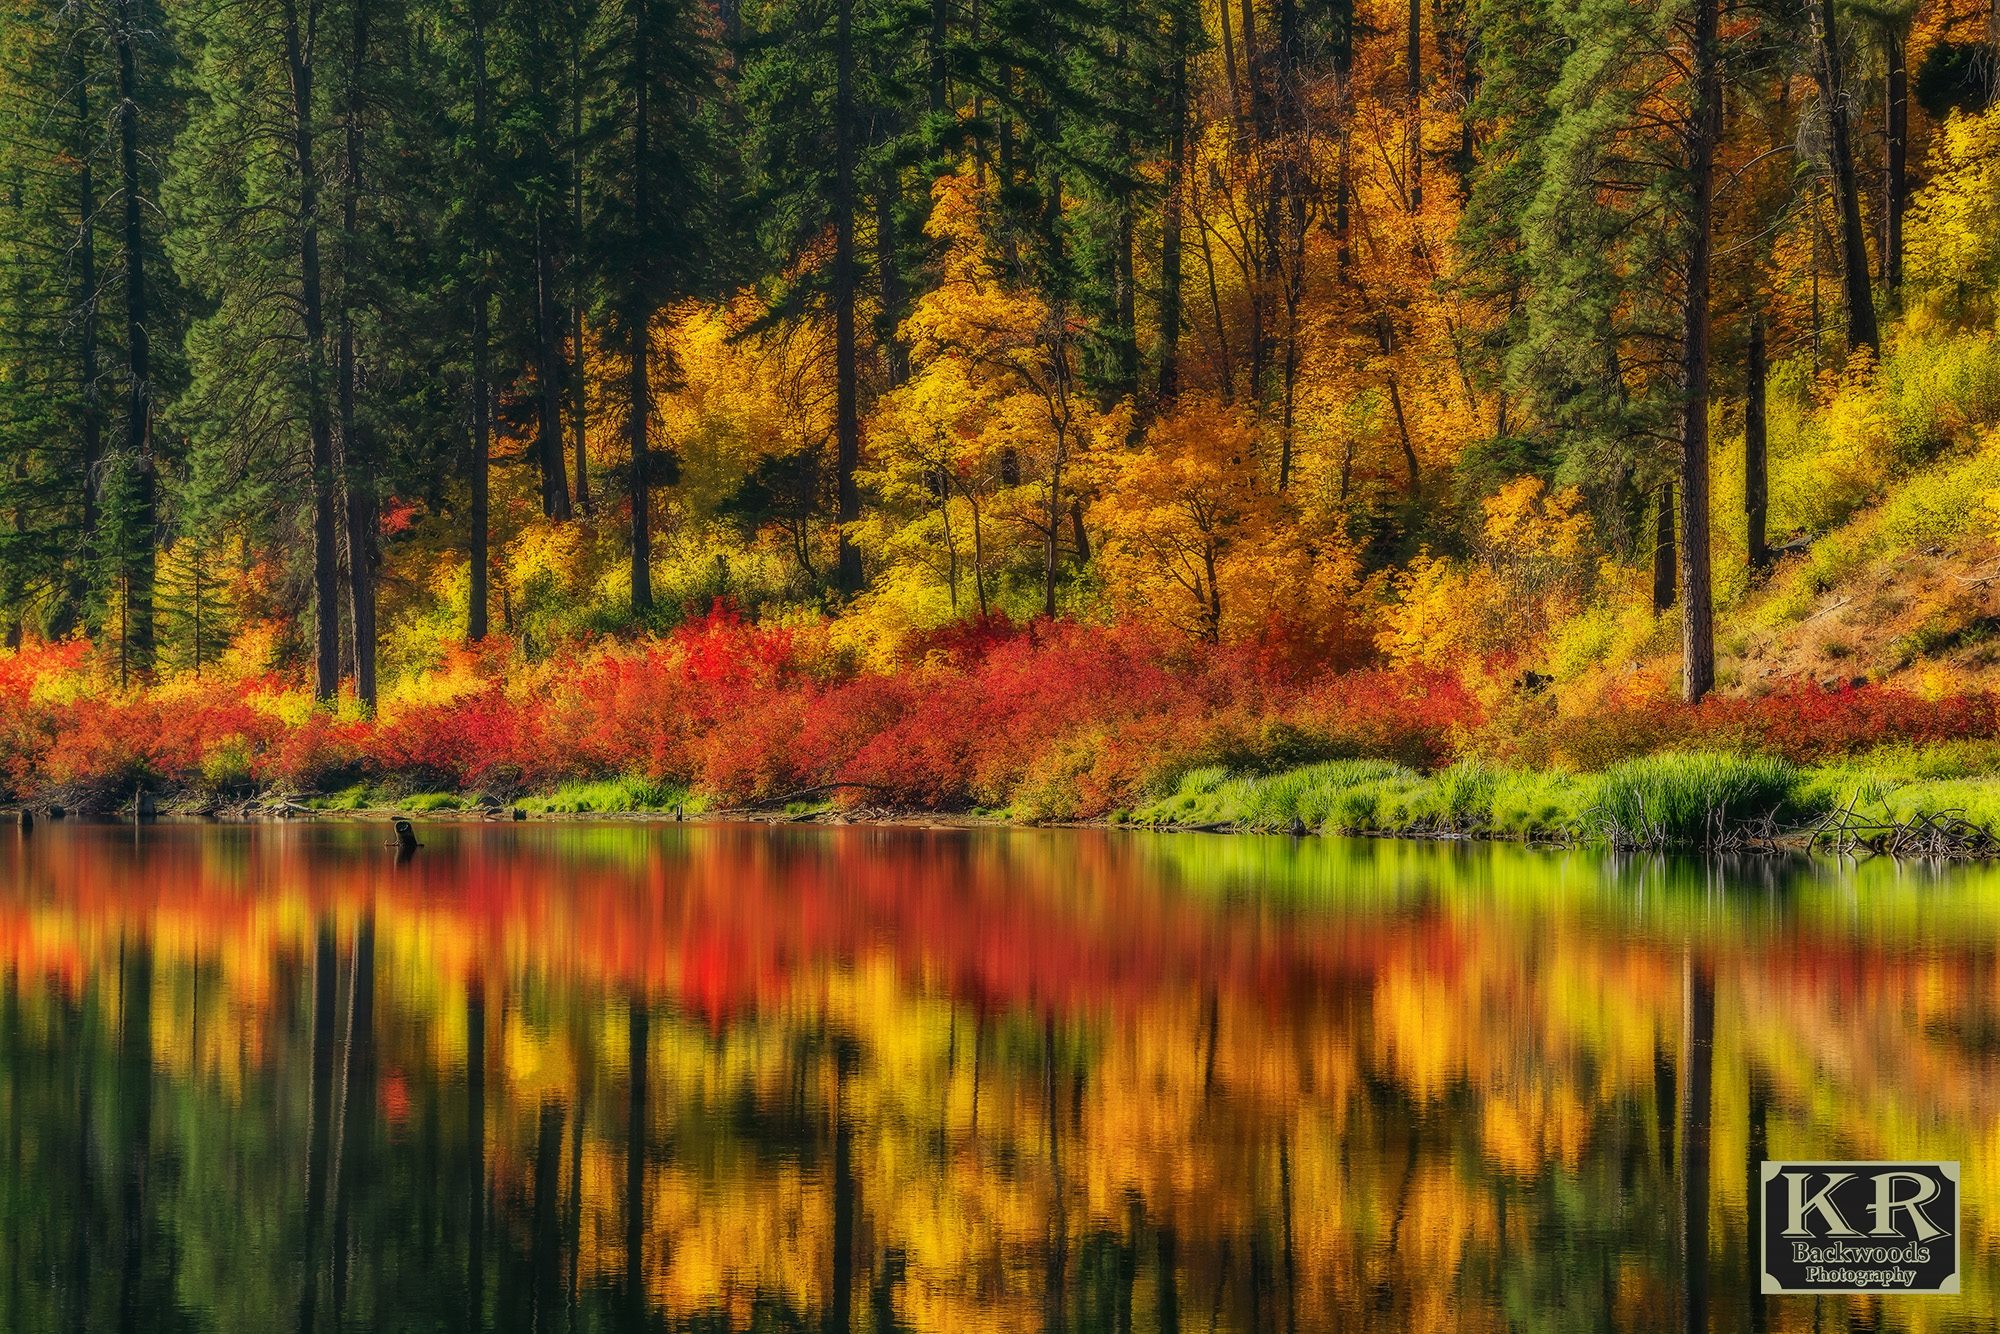 Photos: Northwest shows off its incredible autumn splendor | KOMO